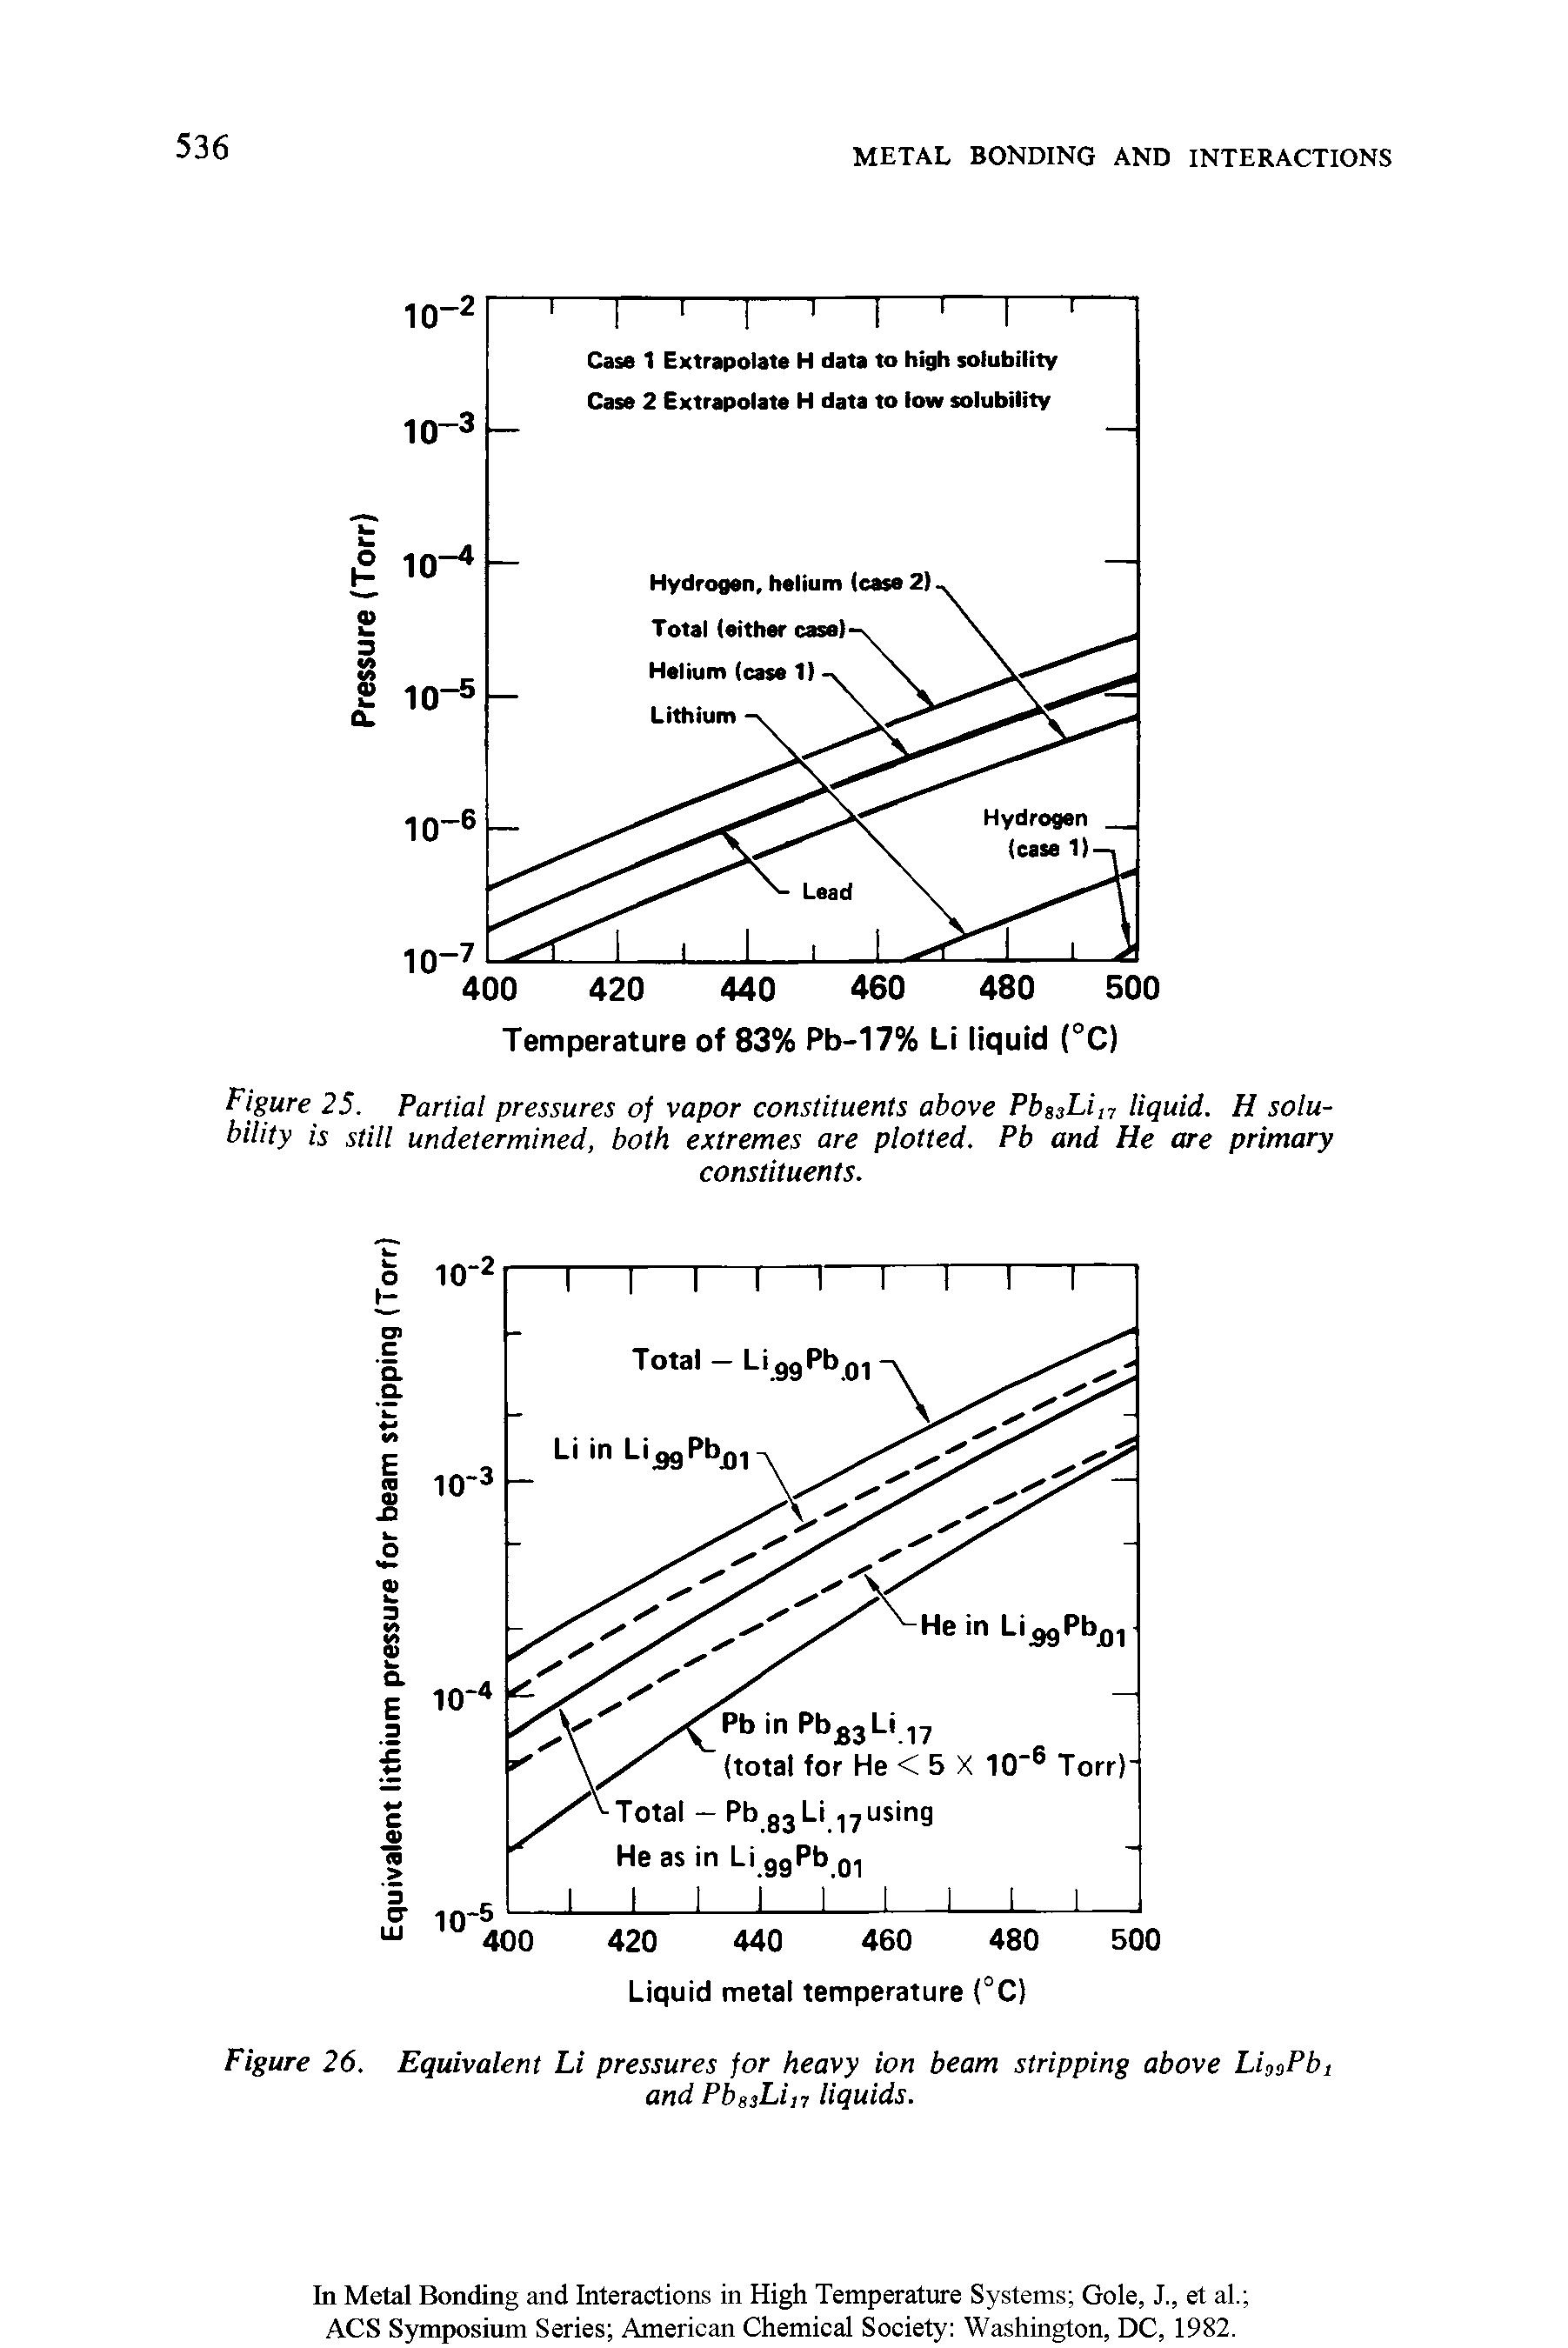 Figure 26. Equivalent Li pressures for heavy ion beam stripping above Li,oPbi...